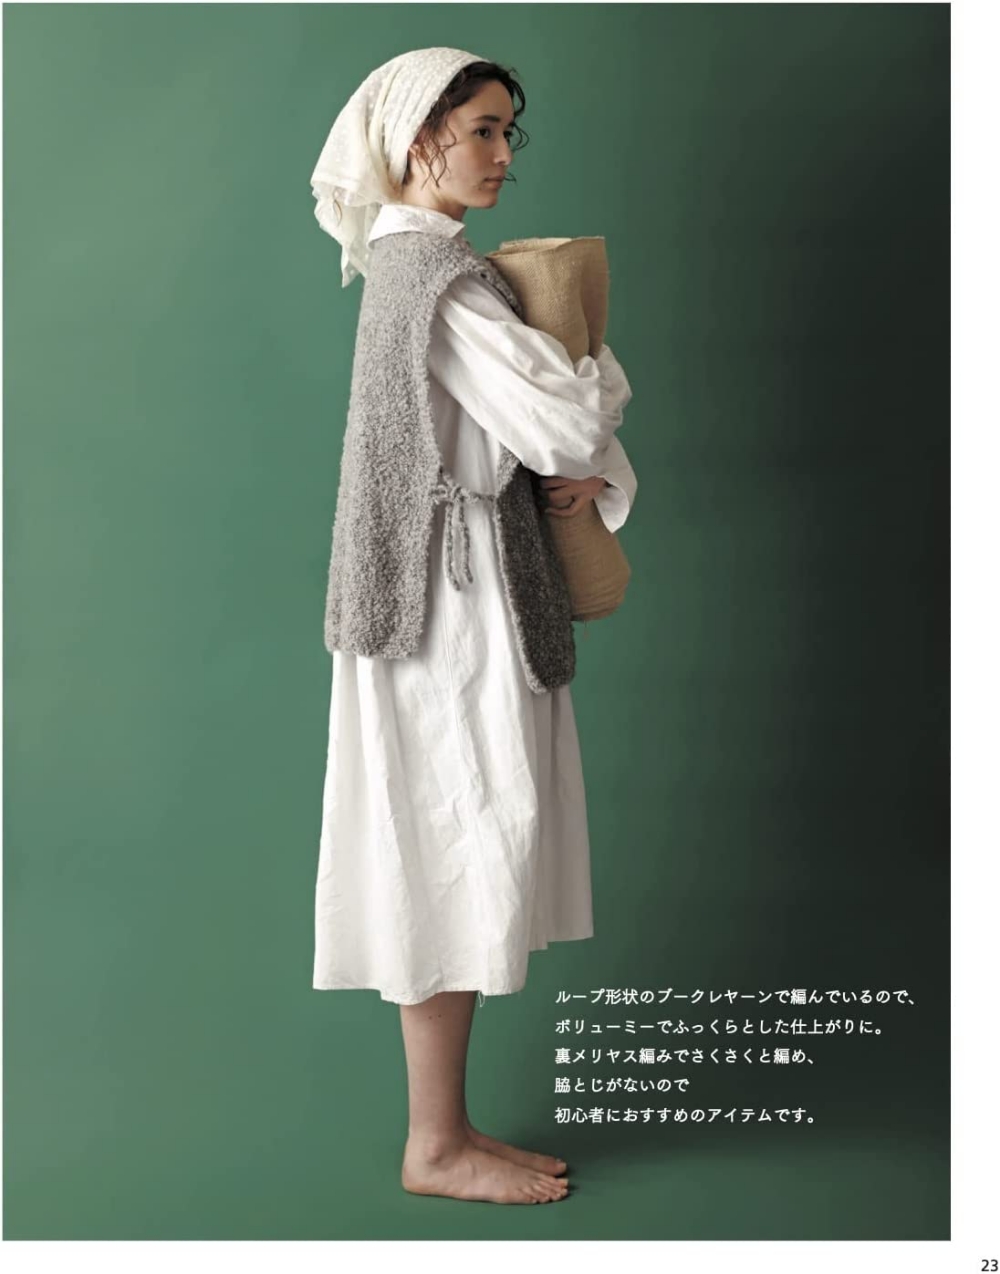 Sonomono knit wear and goods (applemints)